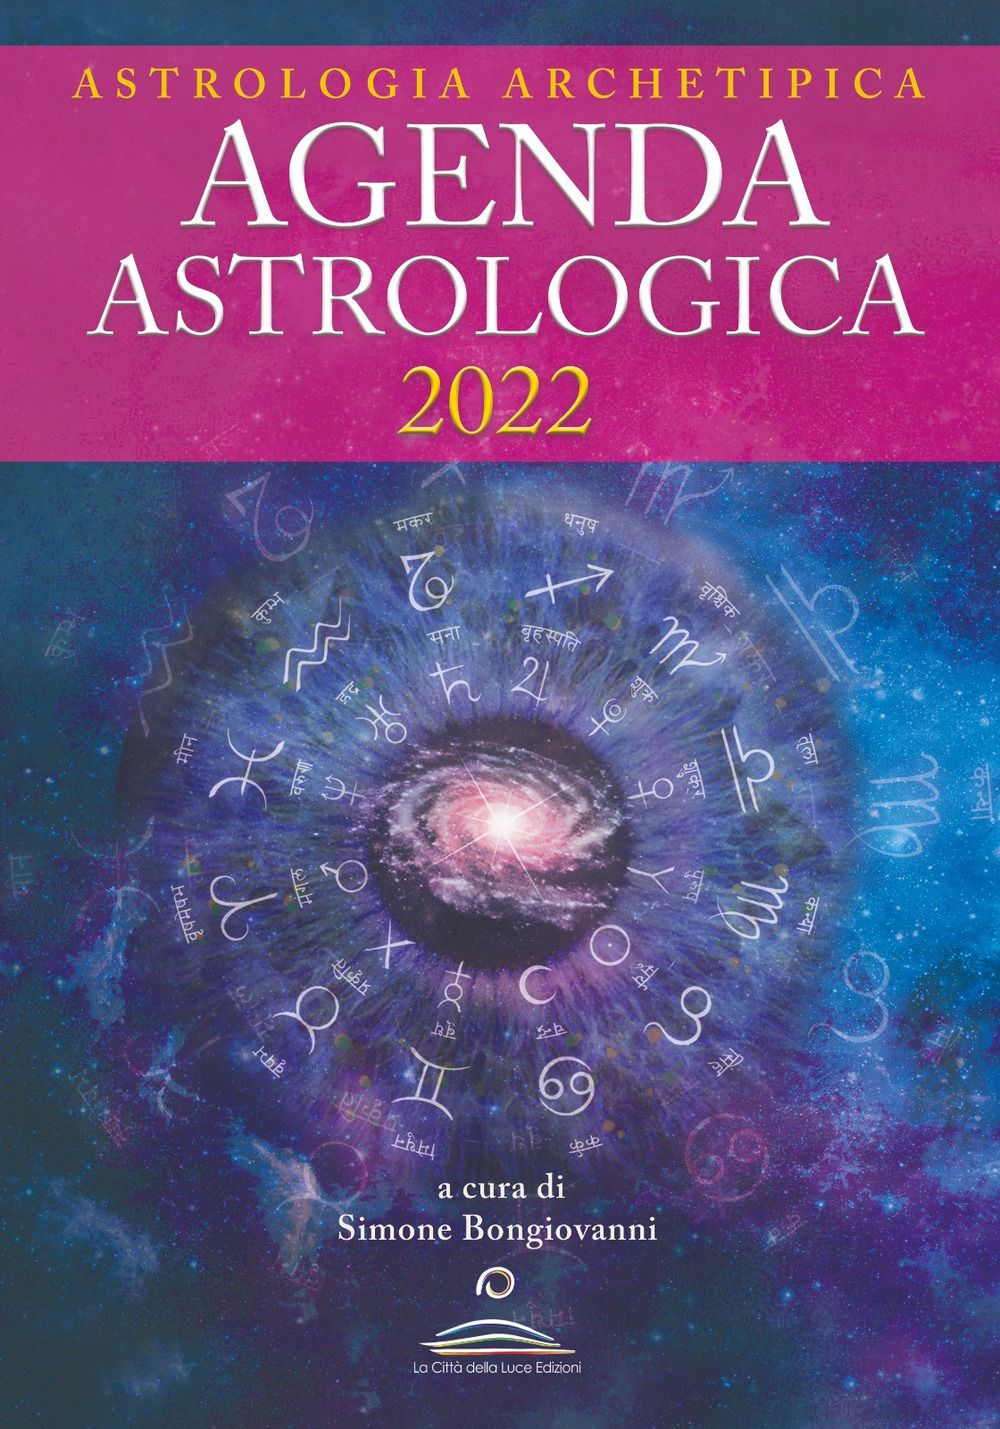 Astrologia archetipica. Agenda astrologica 2022